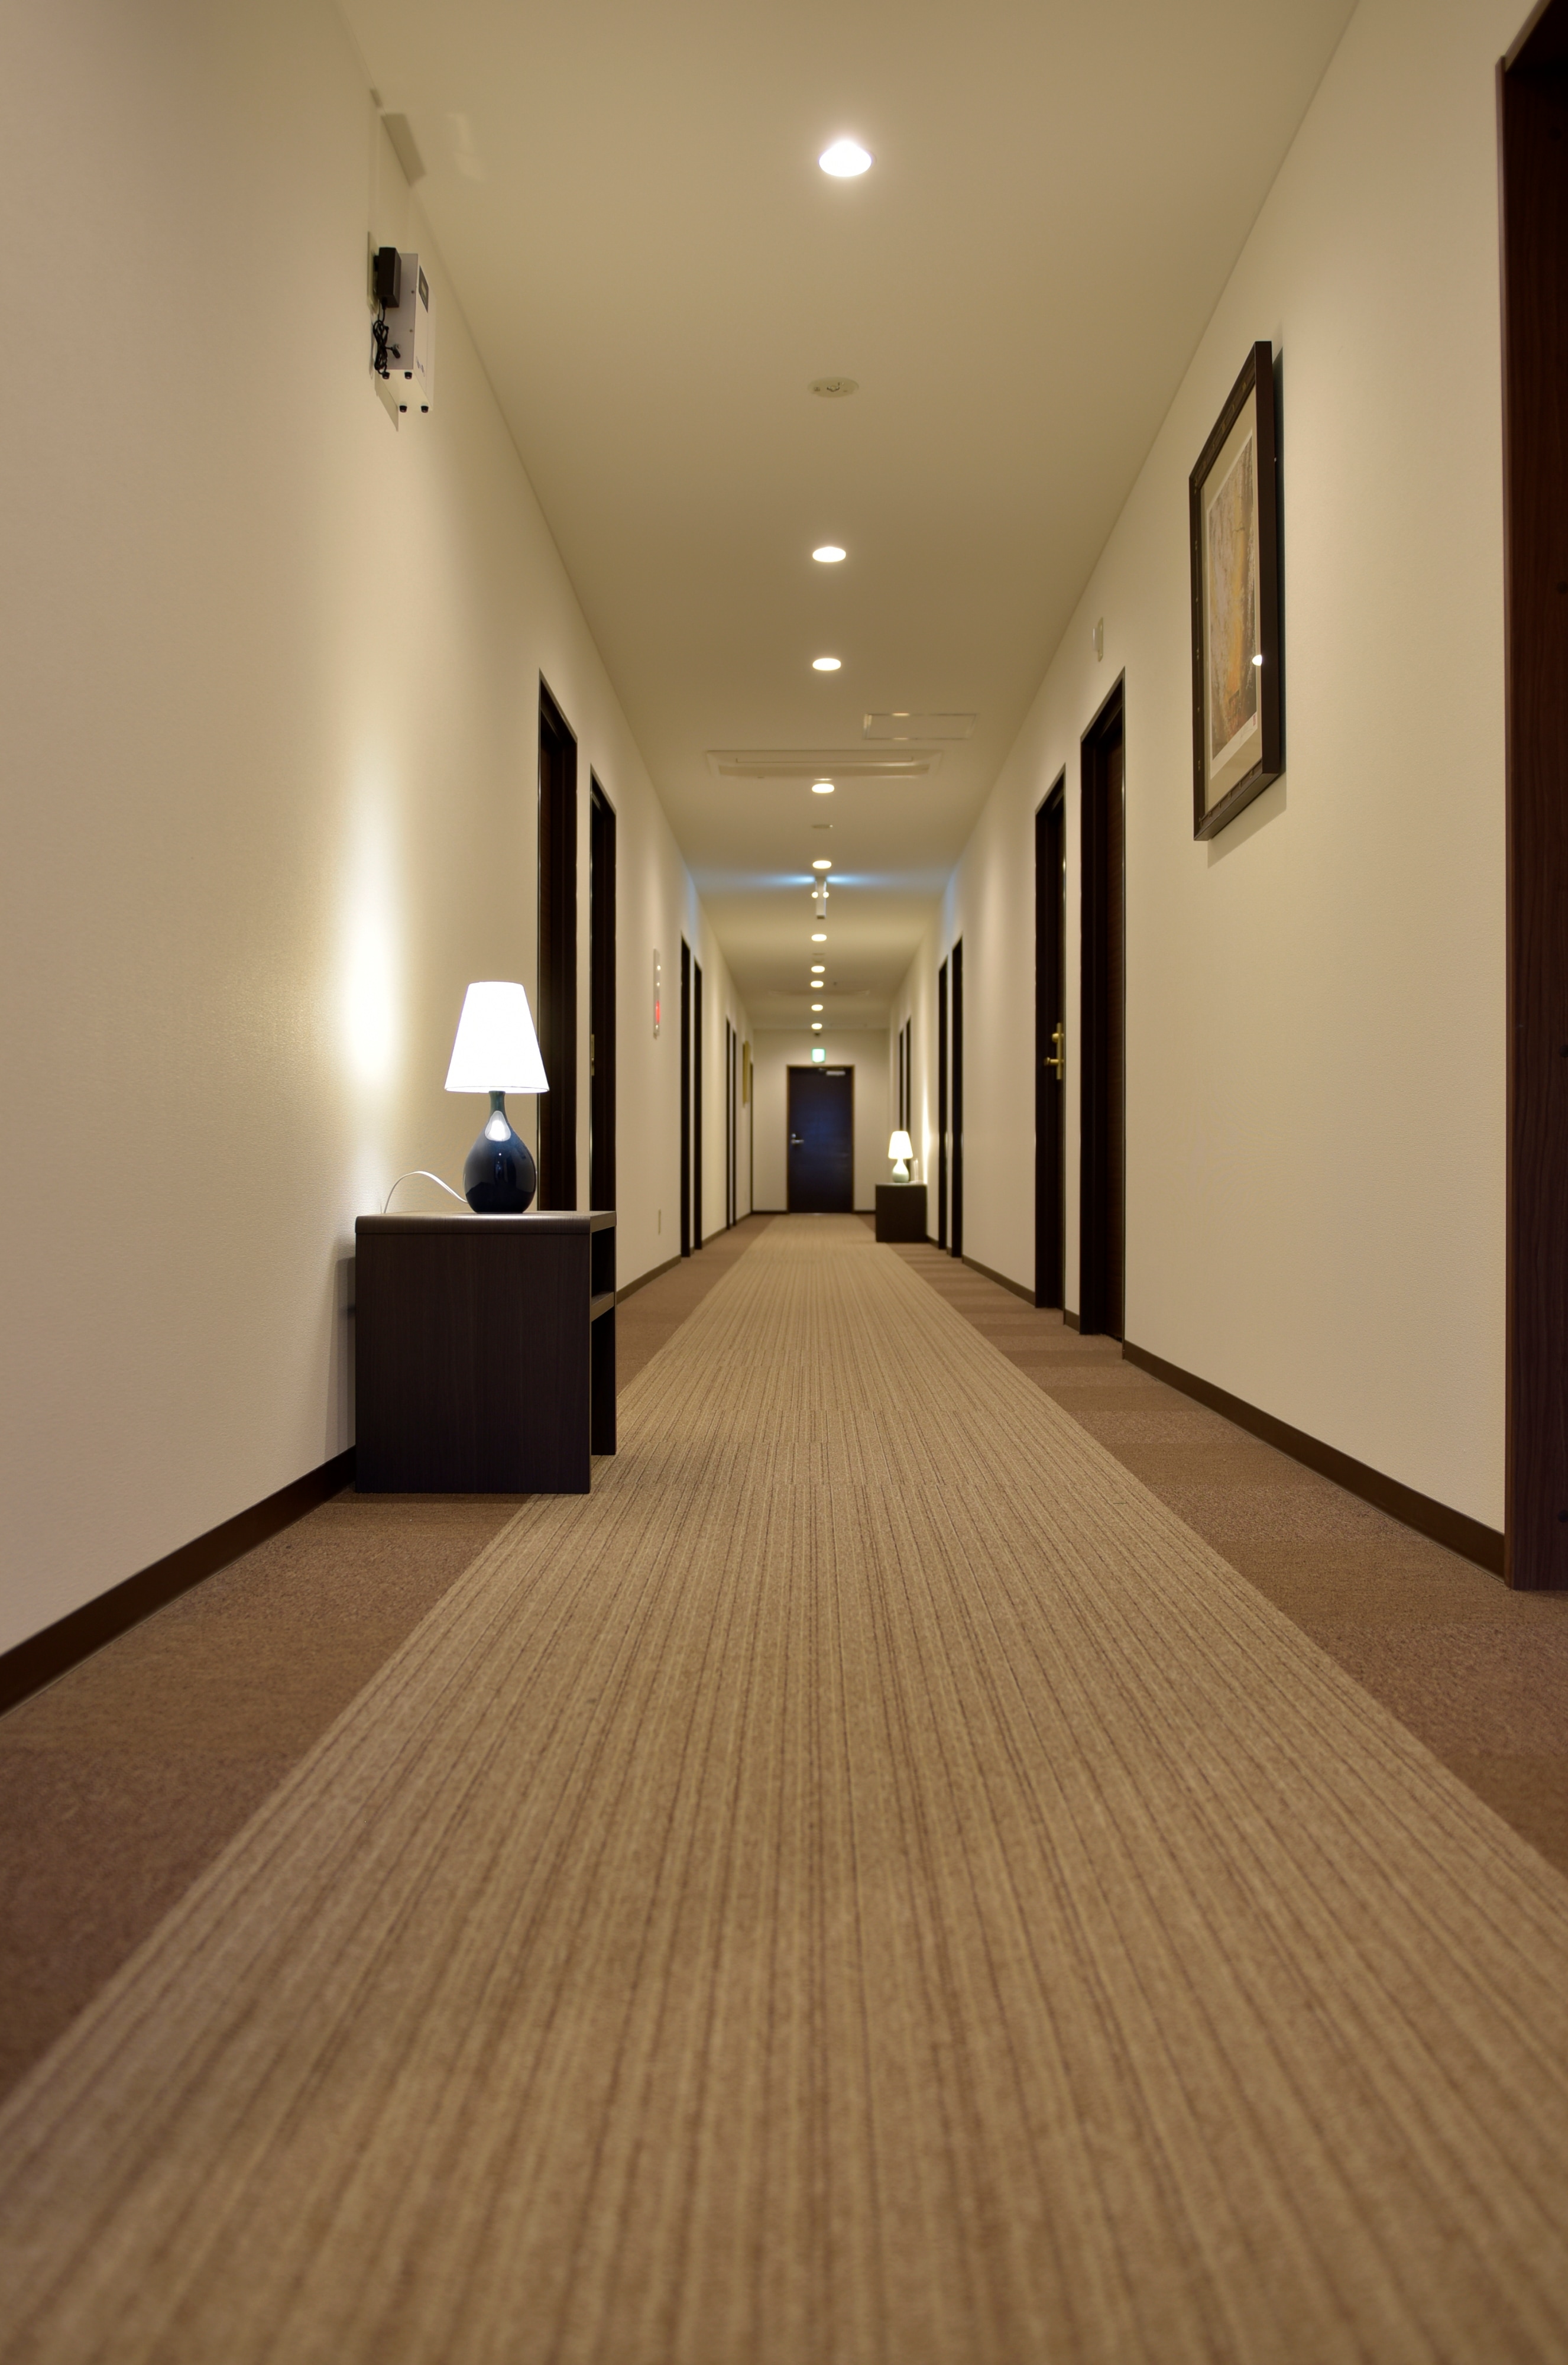 Hotel corridor